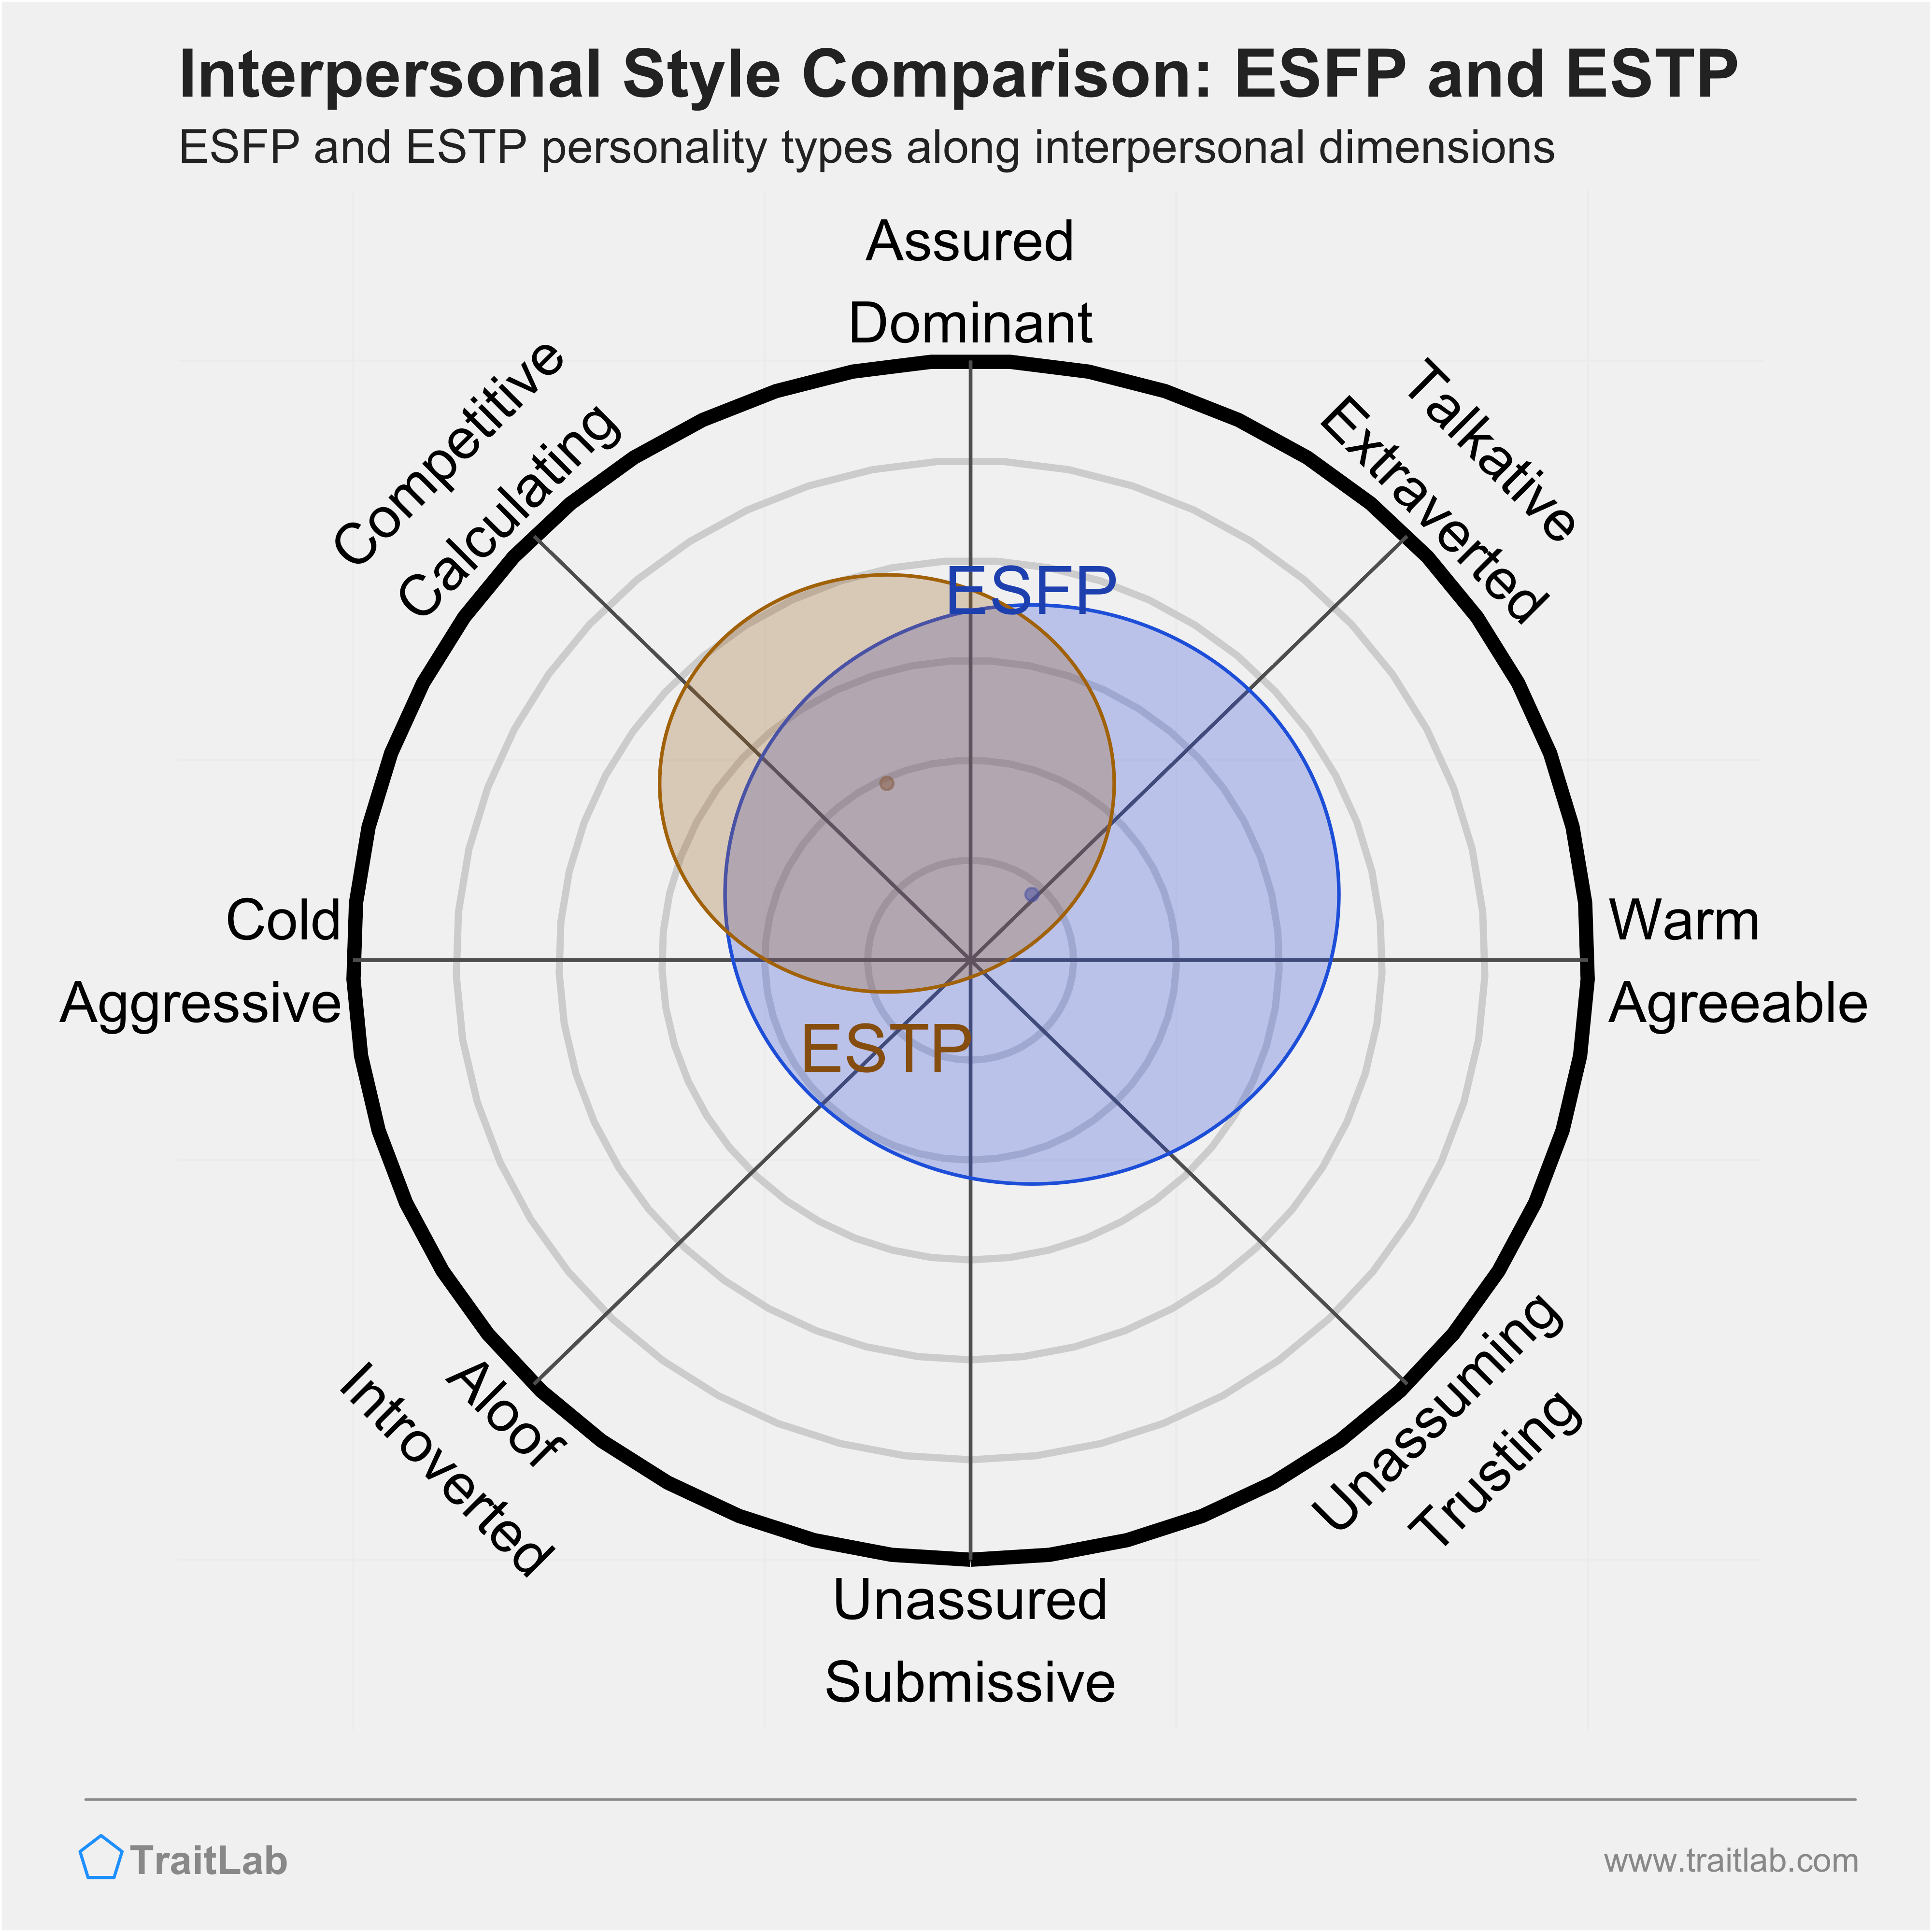 ESFP and ESTP comparison across interpersonal dimensions